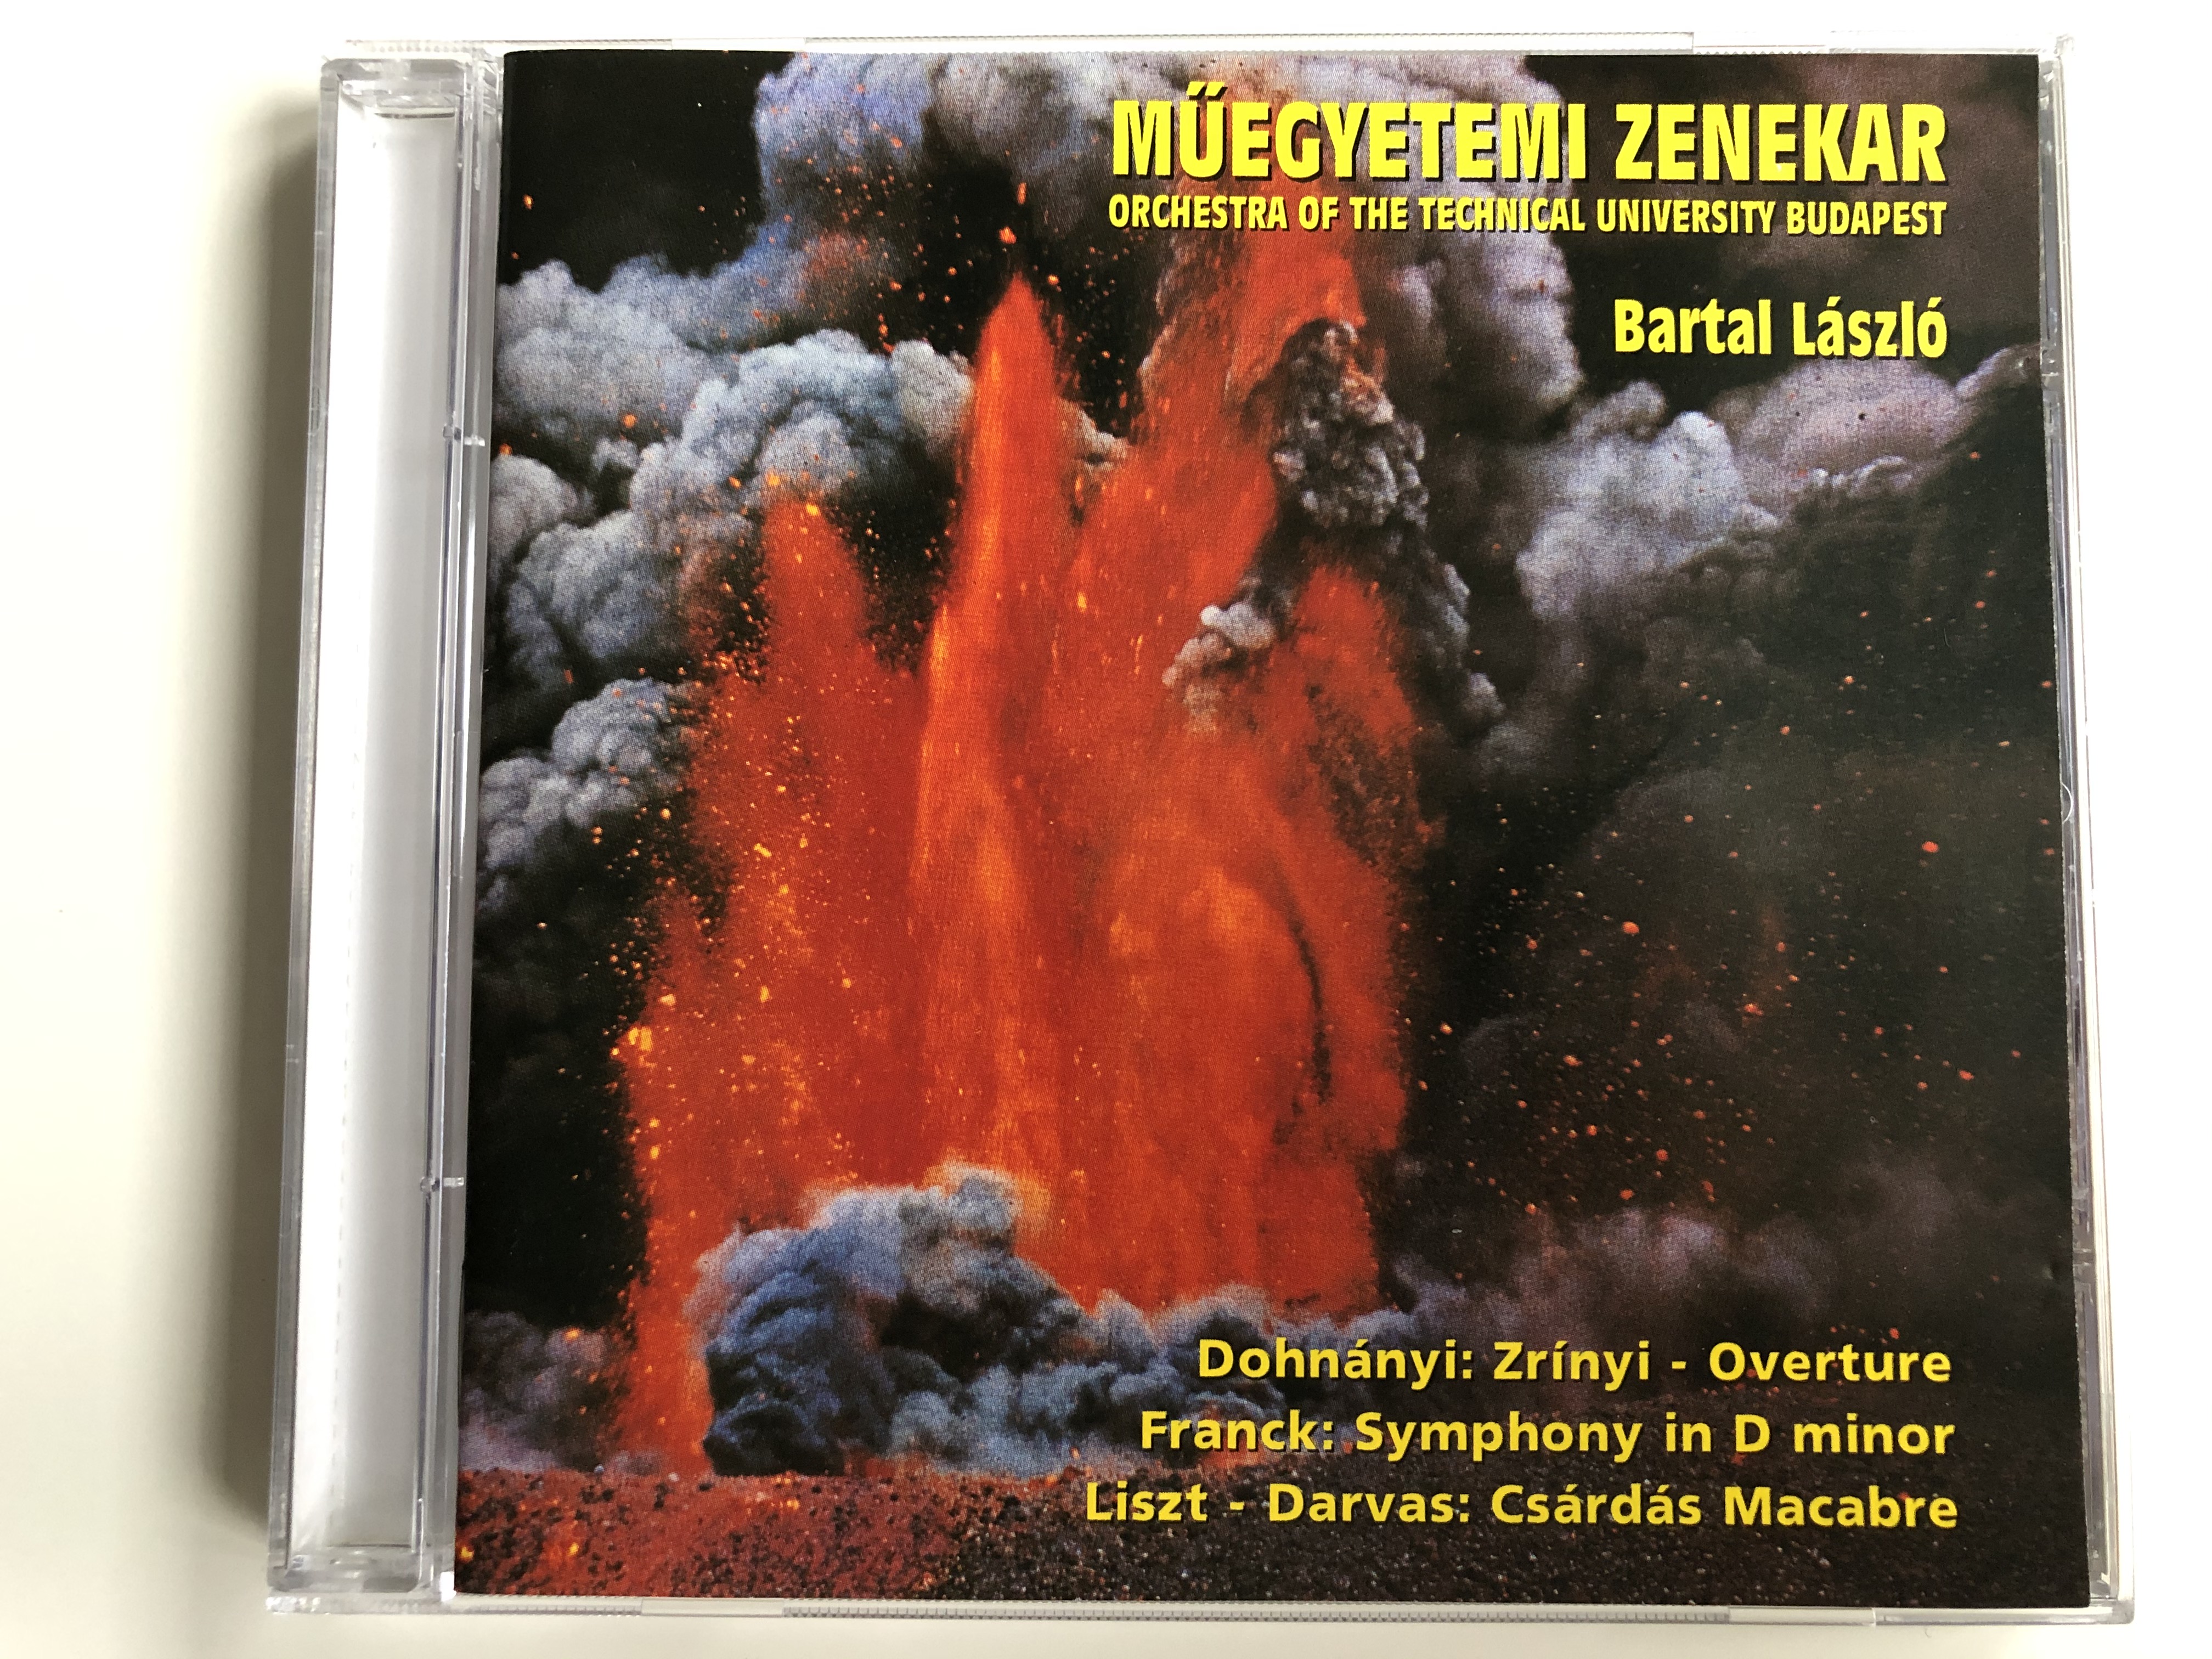 m-egyetemi-zenekar-orchestra-of-the-tehnical-university-budapest-conducted-bartal-l-szl-dohn-nyi-zrinyi-overture-franck-symphony-in-d-minor-liszt-darvas-cs-rd-s-macabre-arco-records-audi-1-.jpg